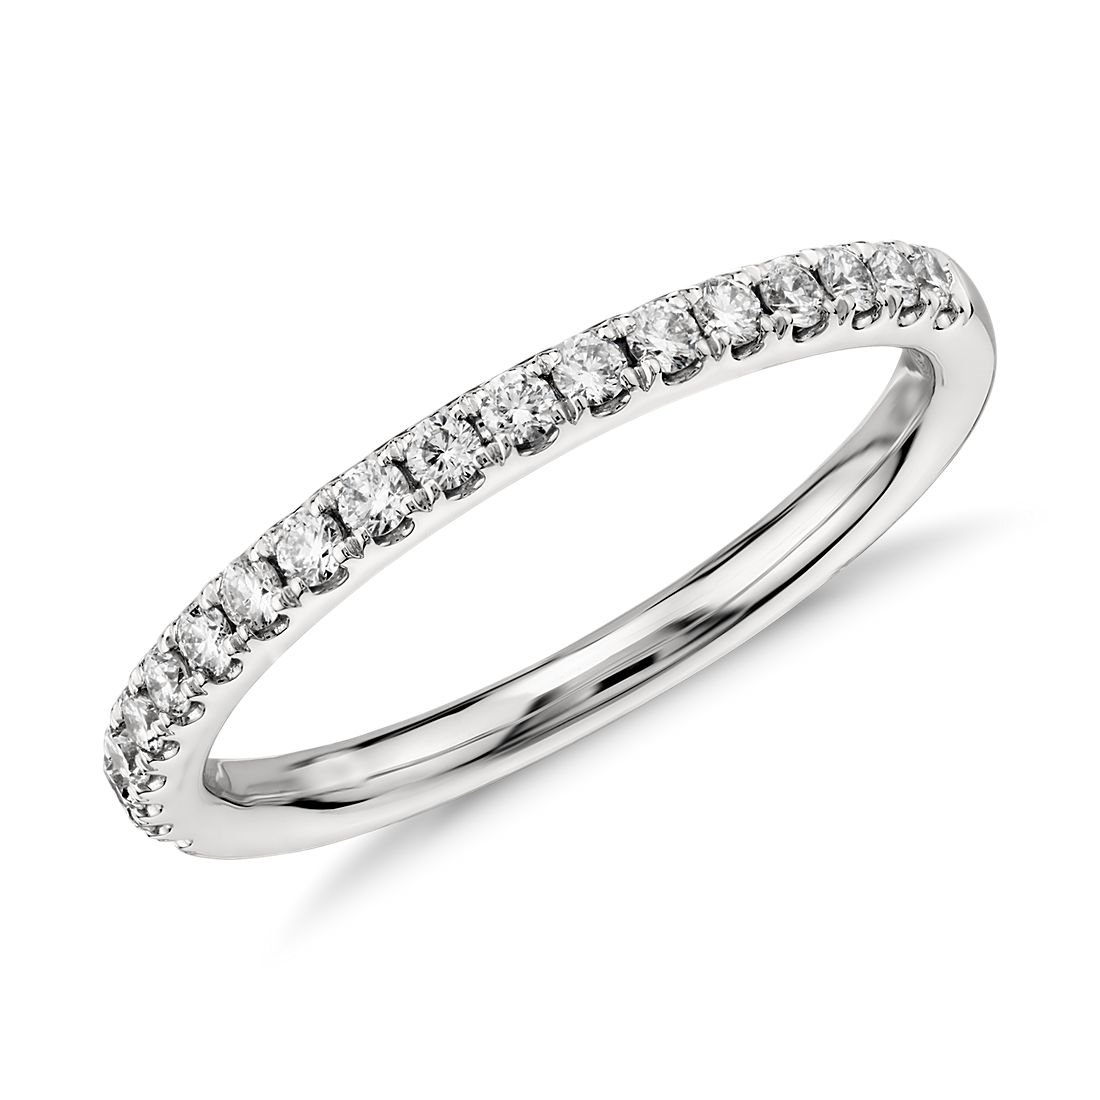 Riviera Pavé Diamond Ring in Platinum (0.25 ct. tw.)